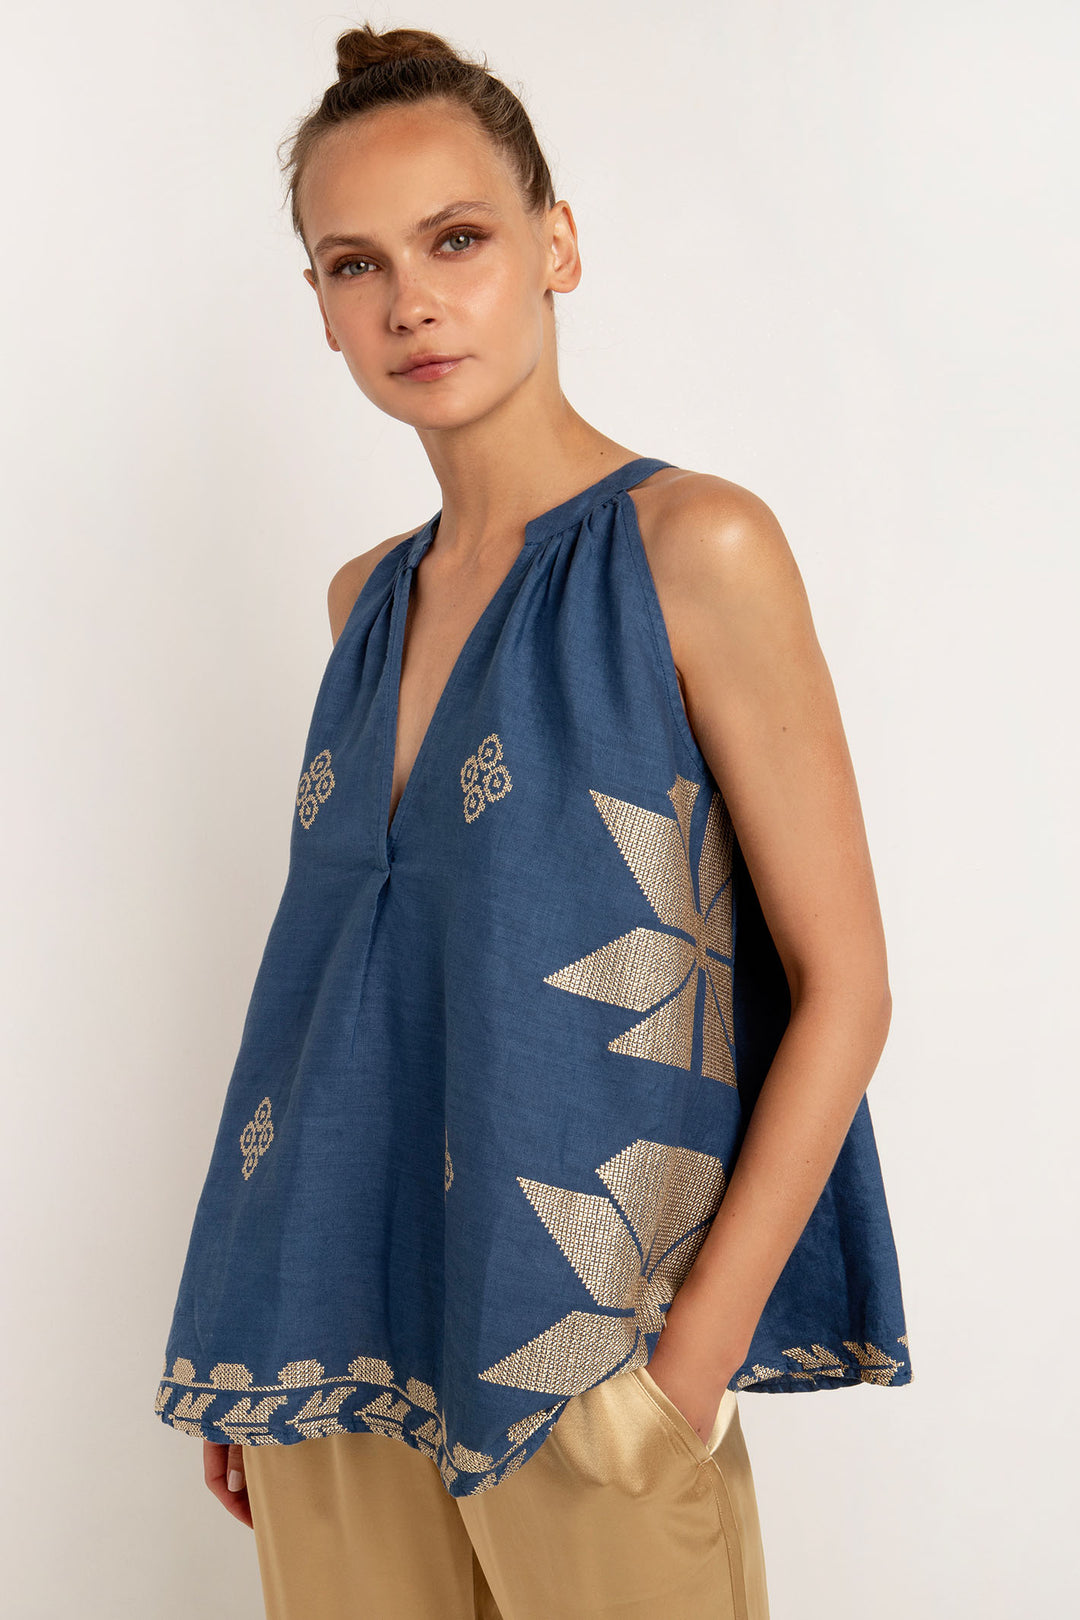 Greek Archaic Kori 240297 Navy Blue Gold Sleeveless Linen Top - Olivia Grace Fashion